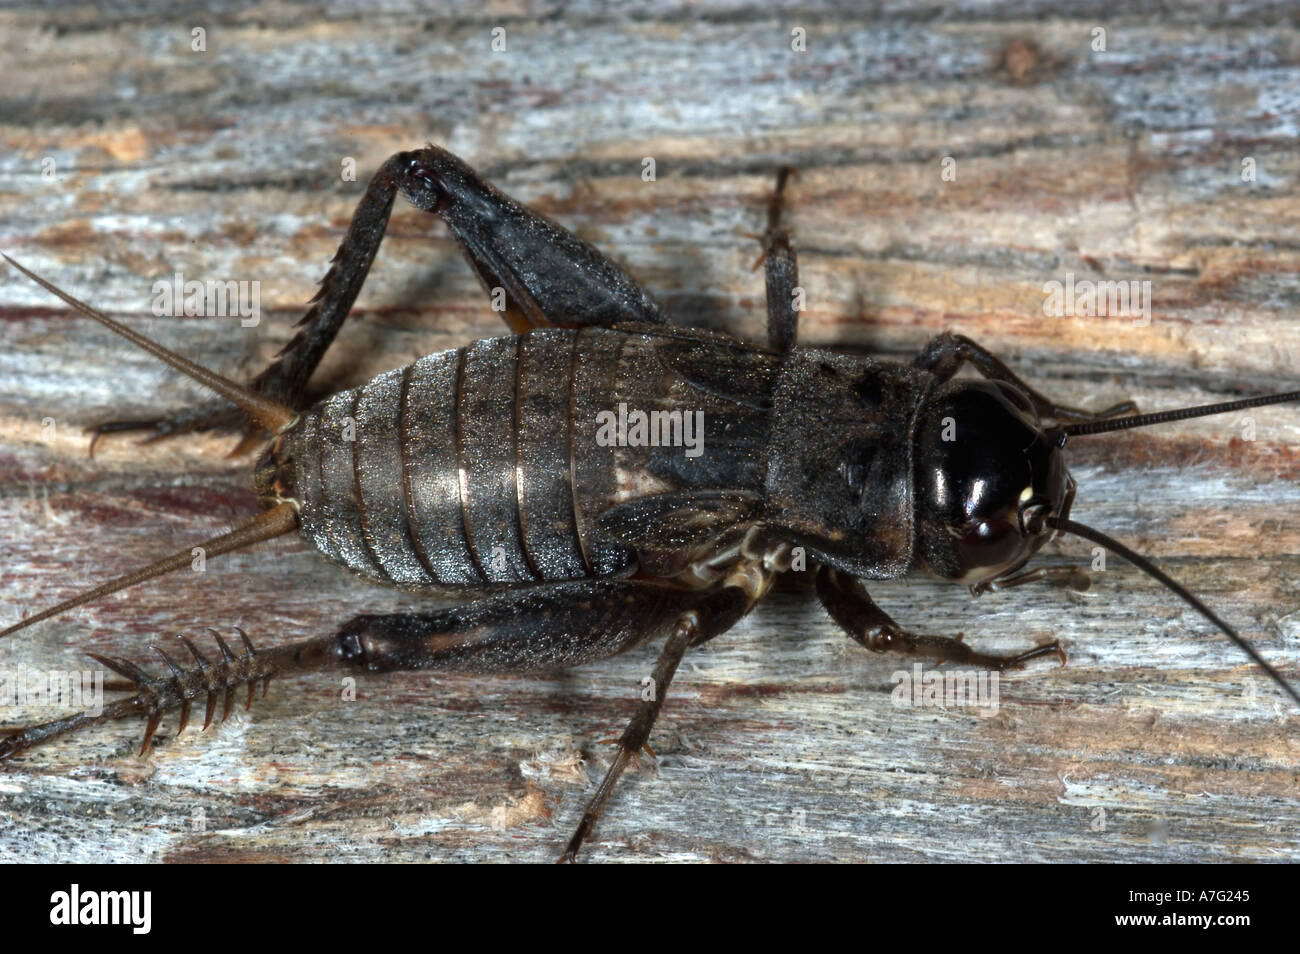 field cricket nymph male Gryllus pennsylvanicus Eastern United States Stock Photo